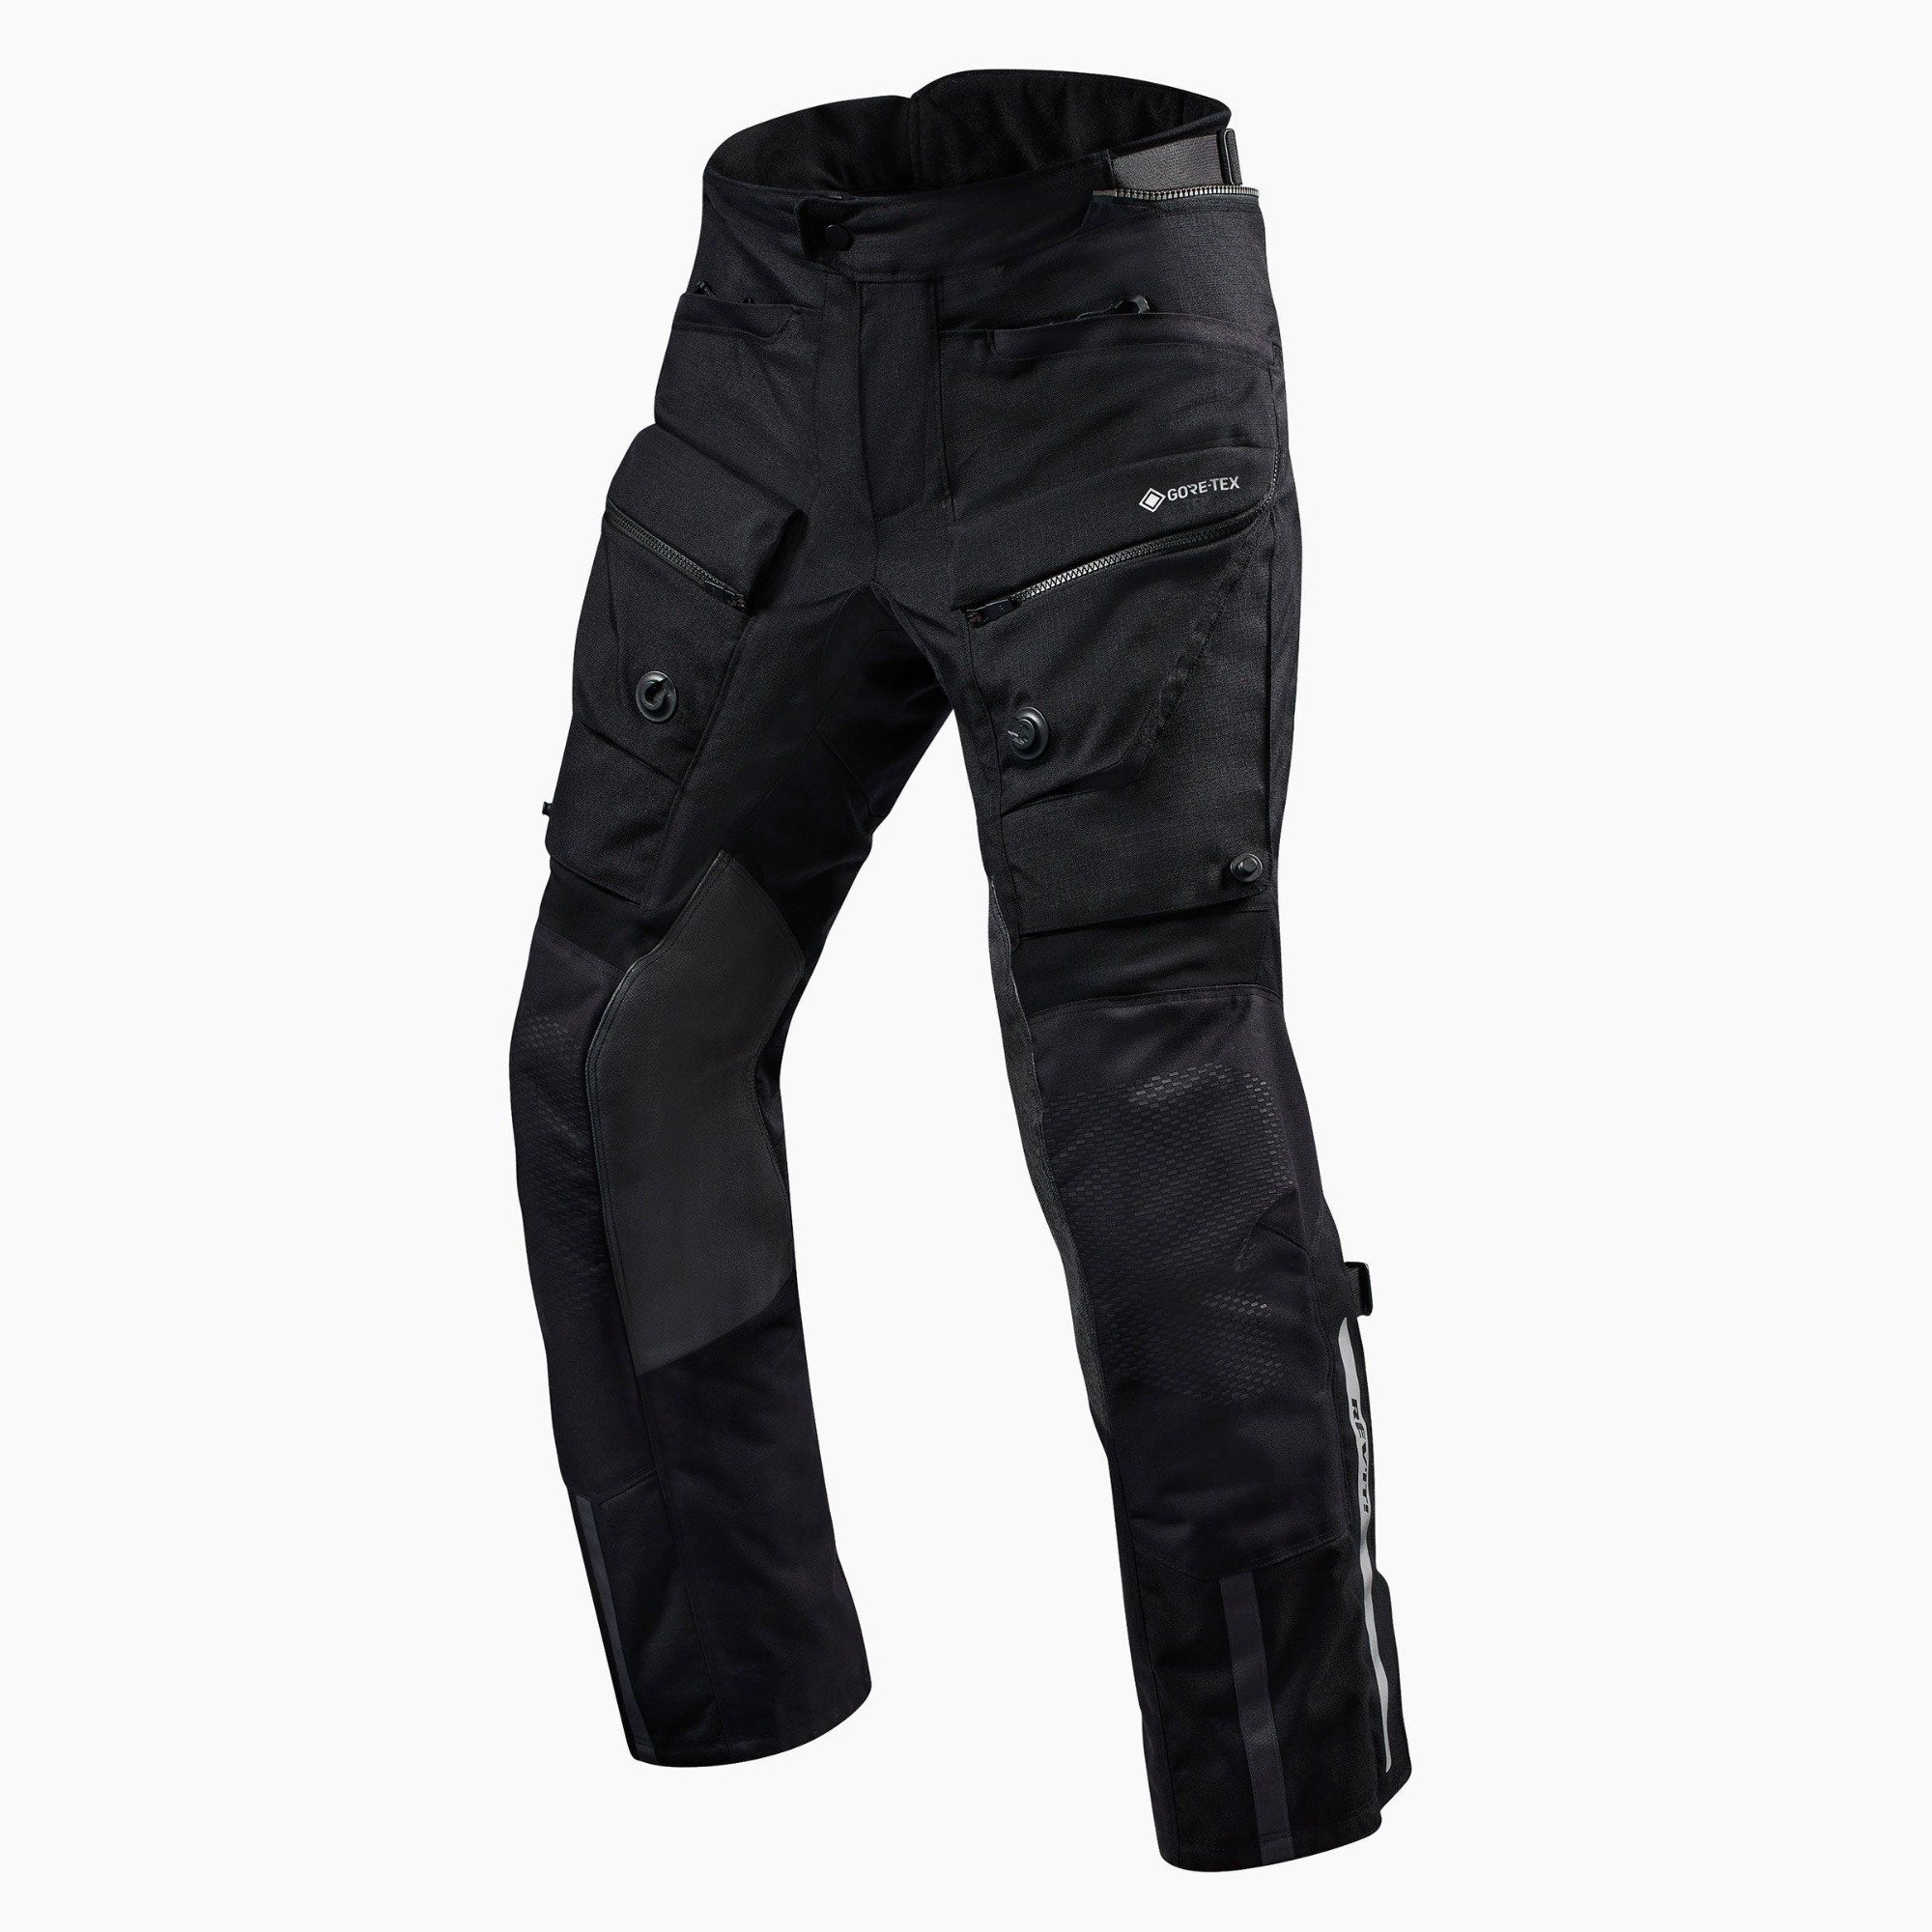 Image of REV'IT! Trousers Defender 3 GTX Black Standard Motorcycle Pants Size M ID 8700001319805